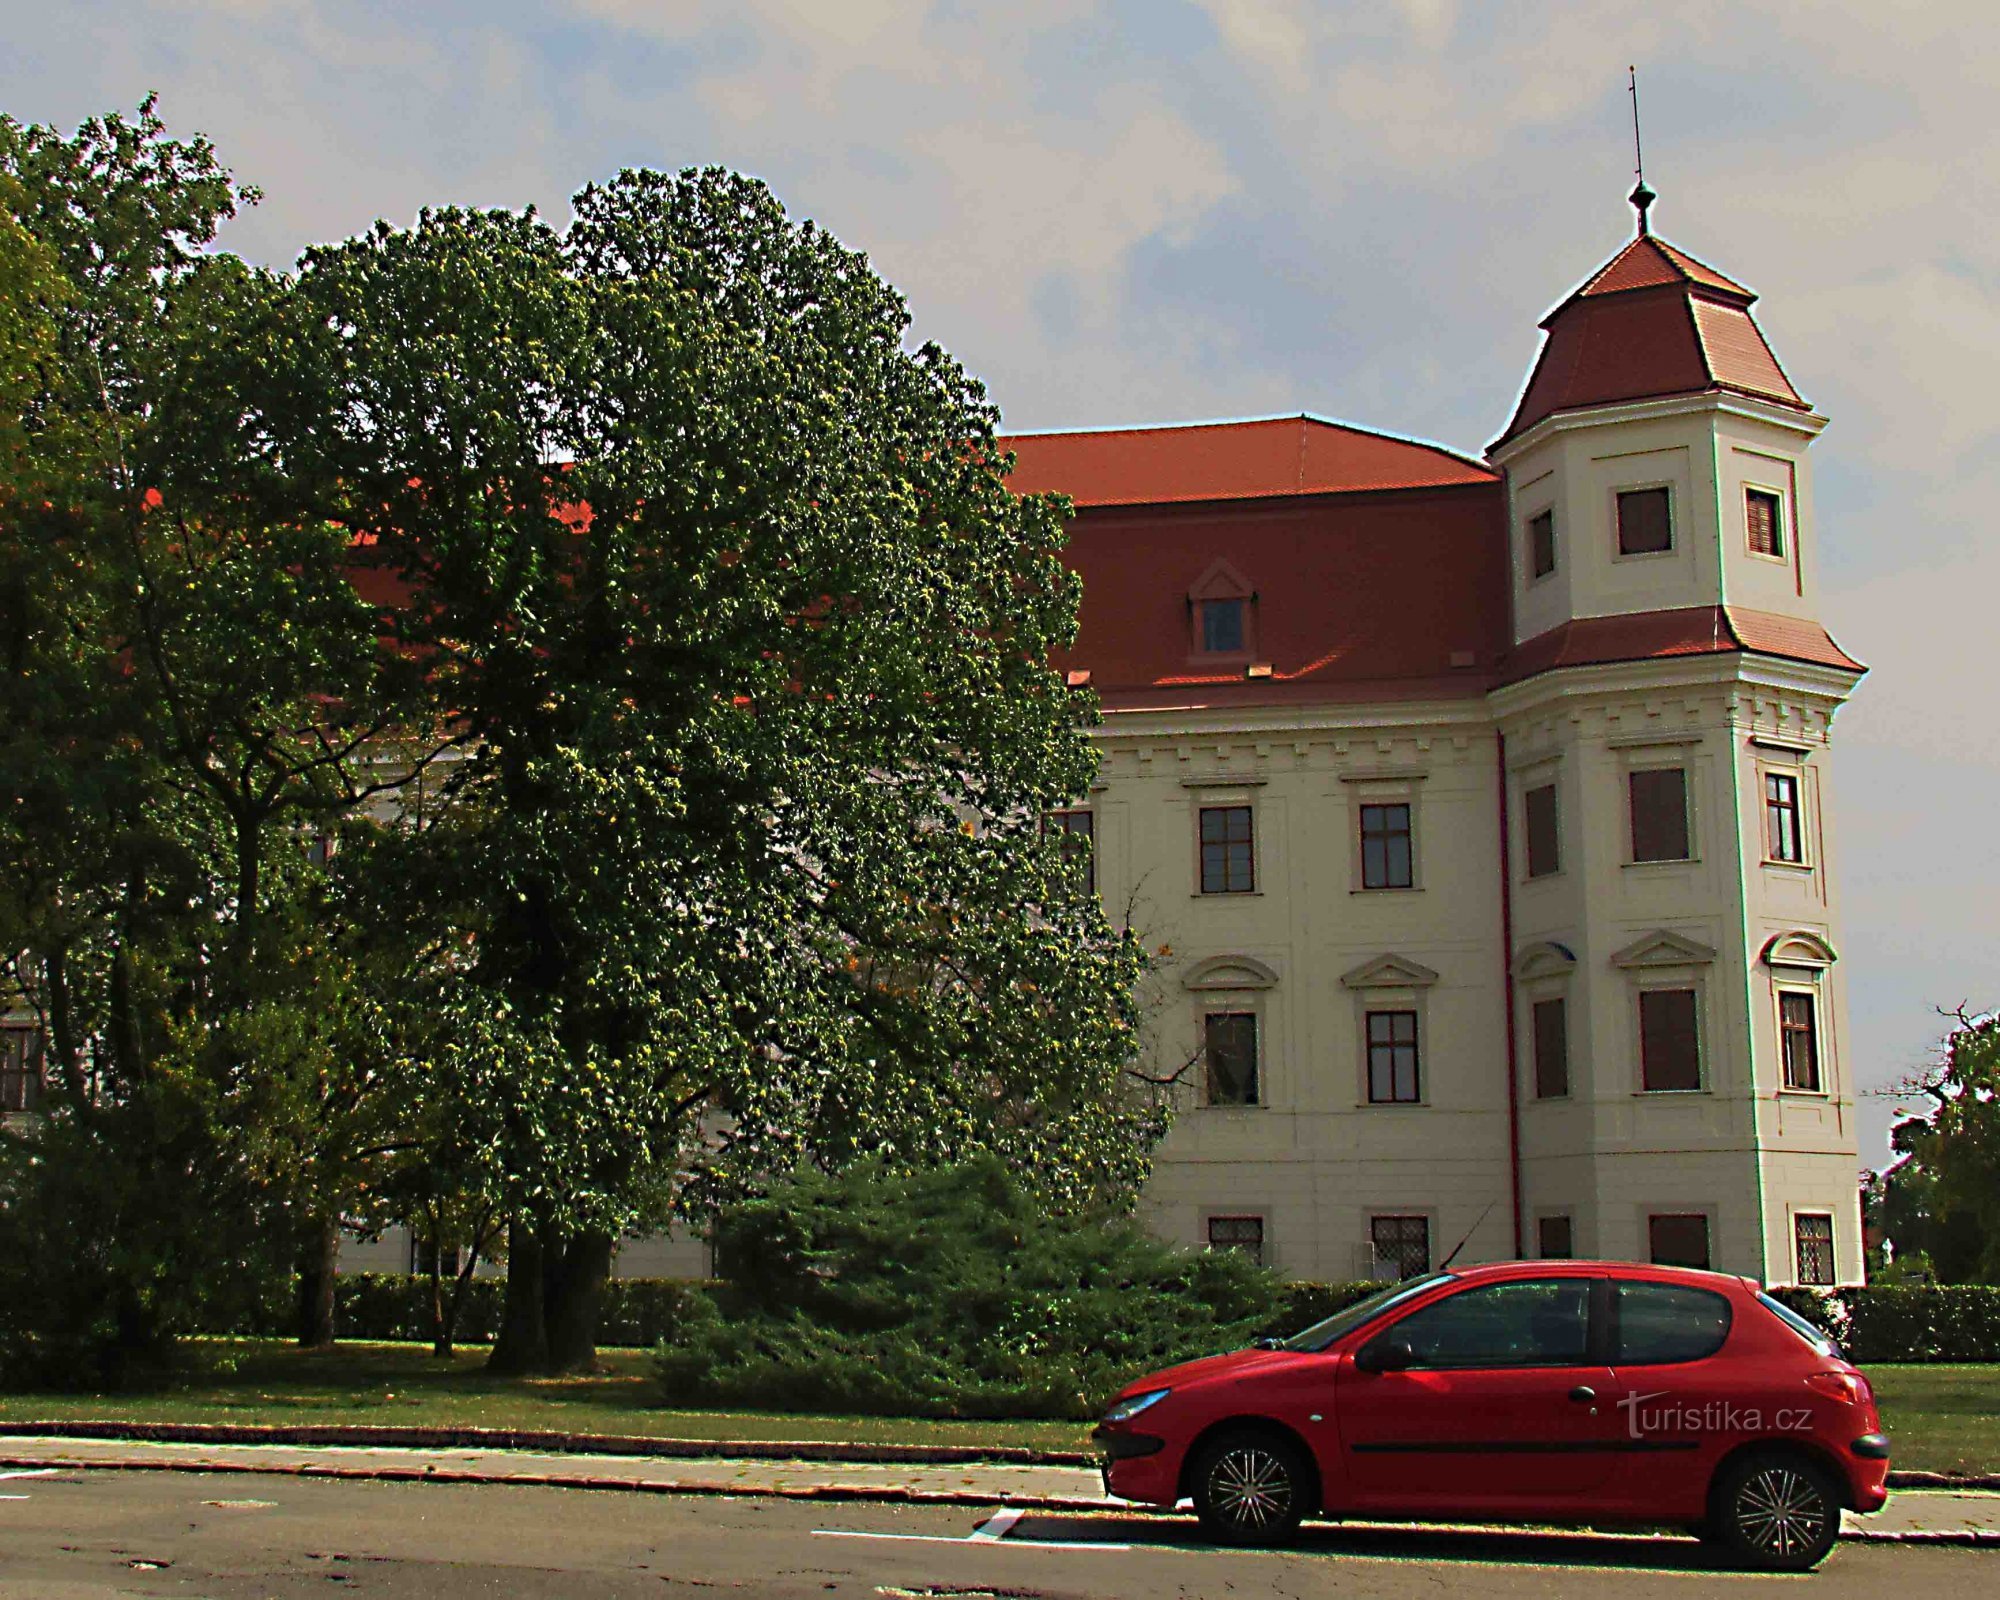 Ecocentro - Hájenka Skřítek nel parco del castello Holešov